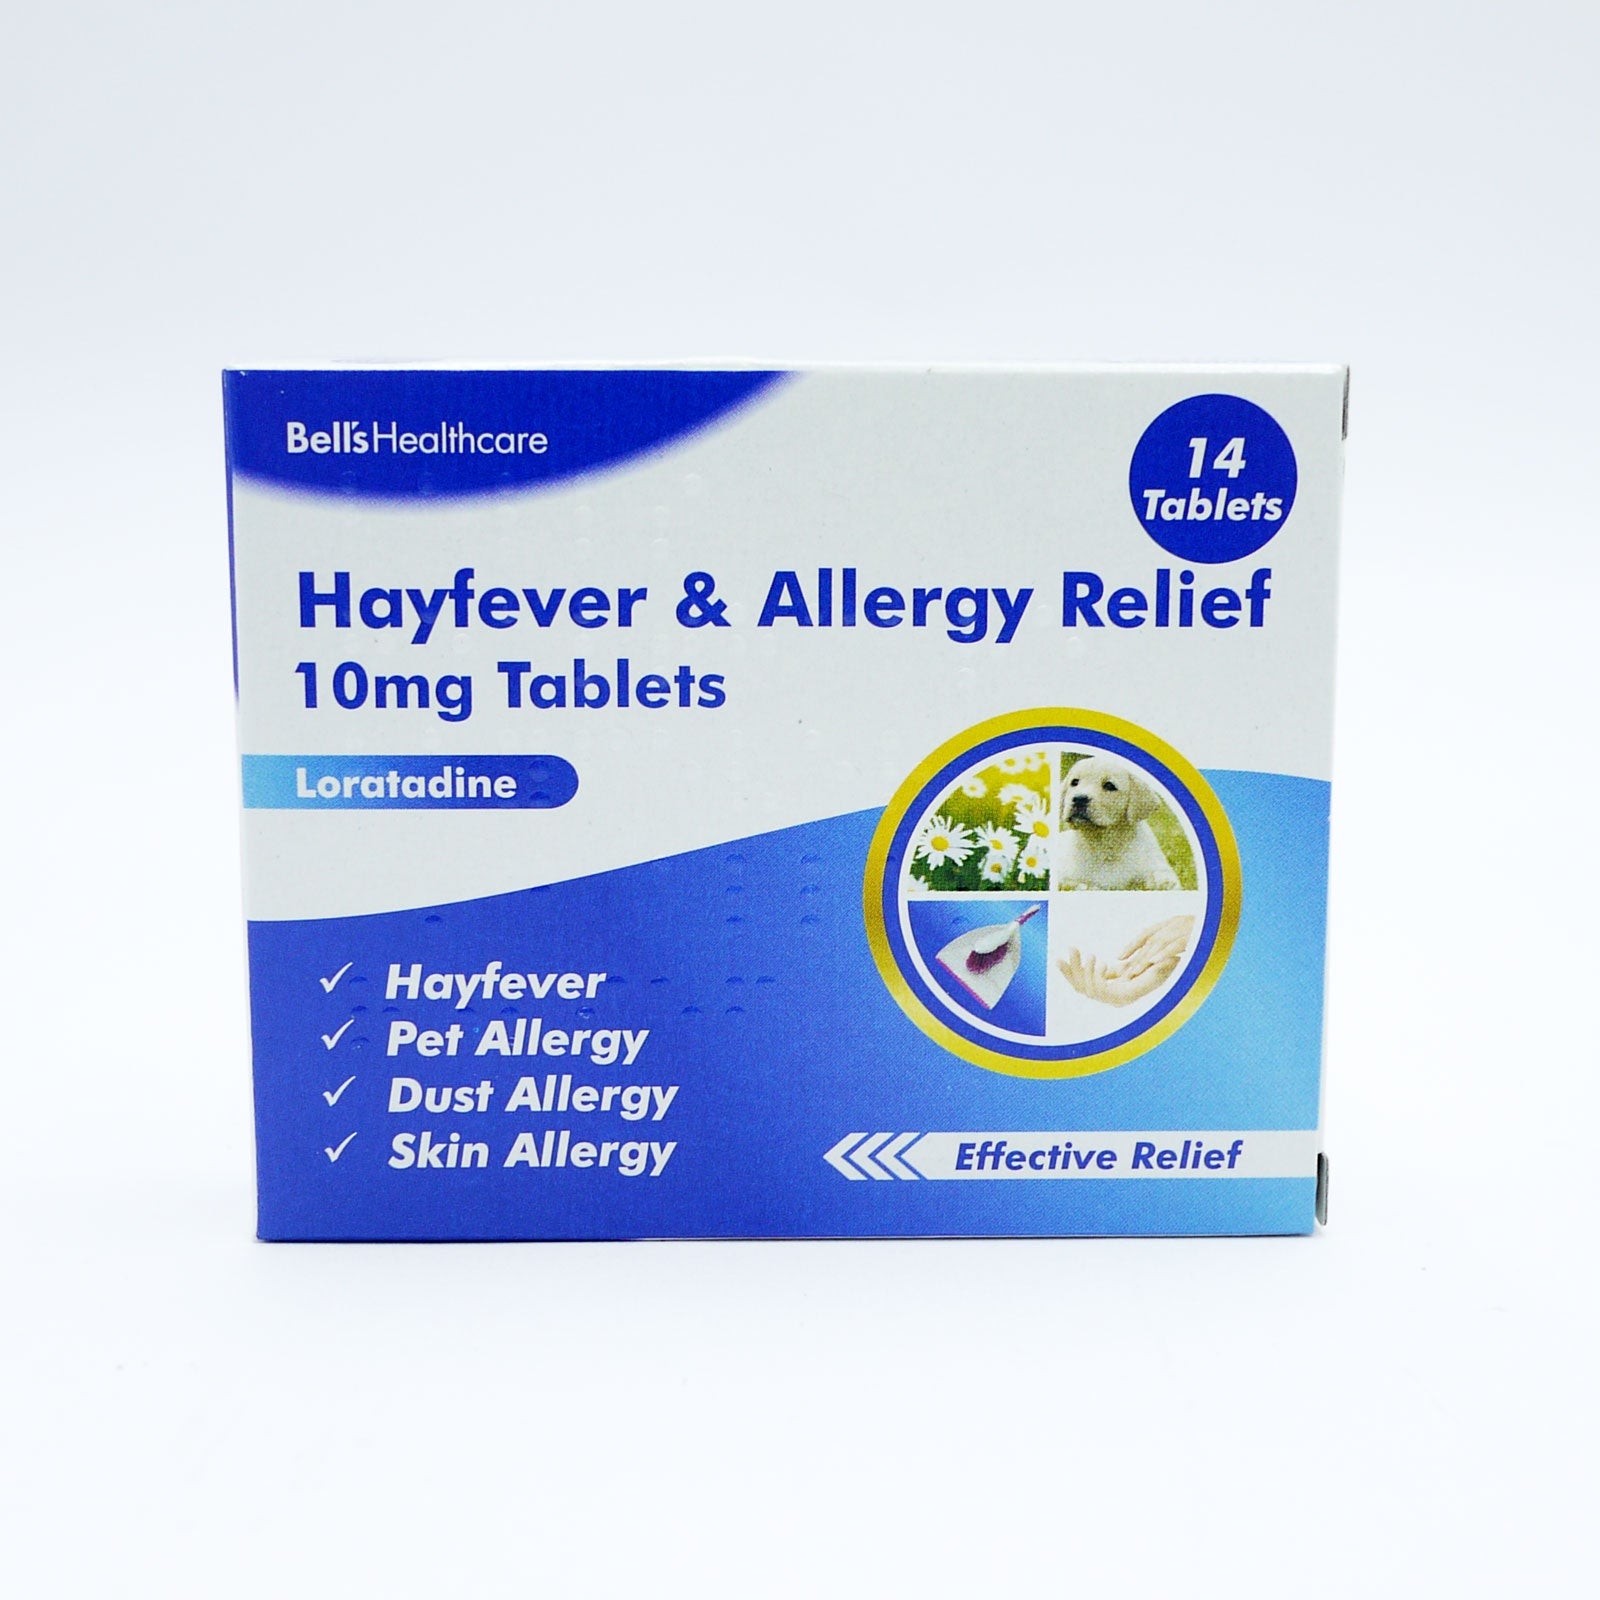 Bell's Healthcare Hayfever & Allergy Relief Loratadine 10mg Tabs*